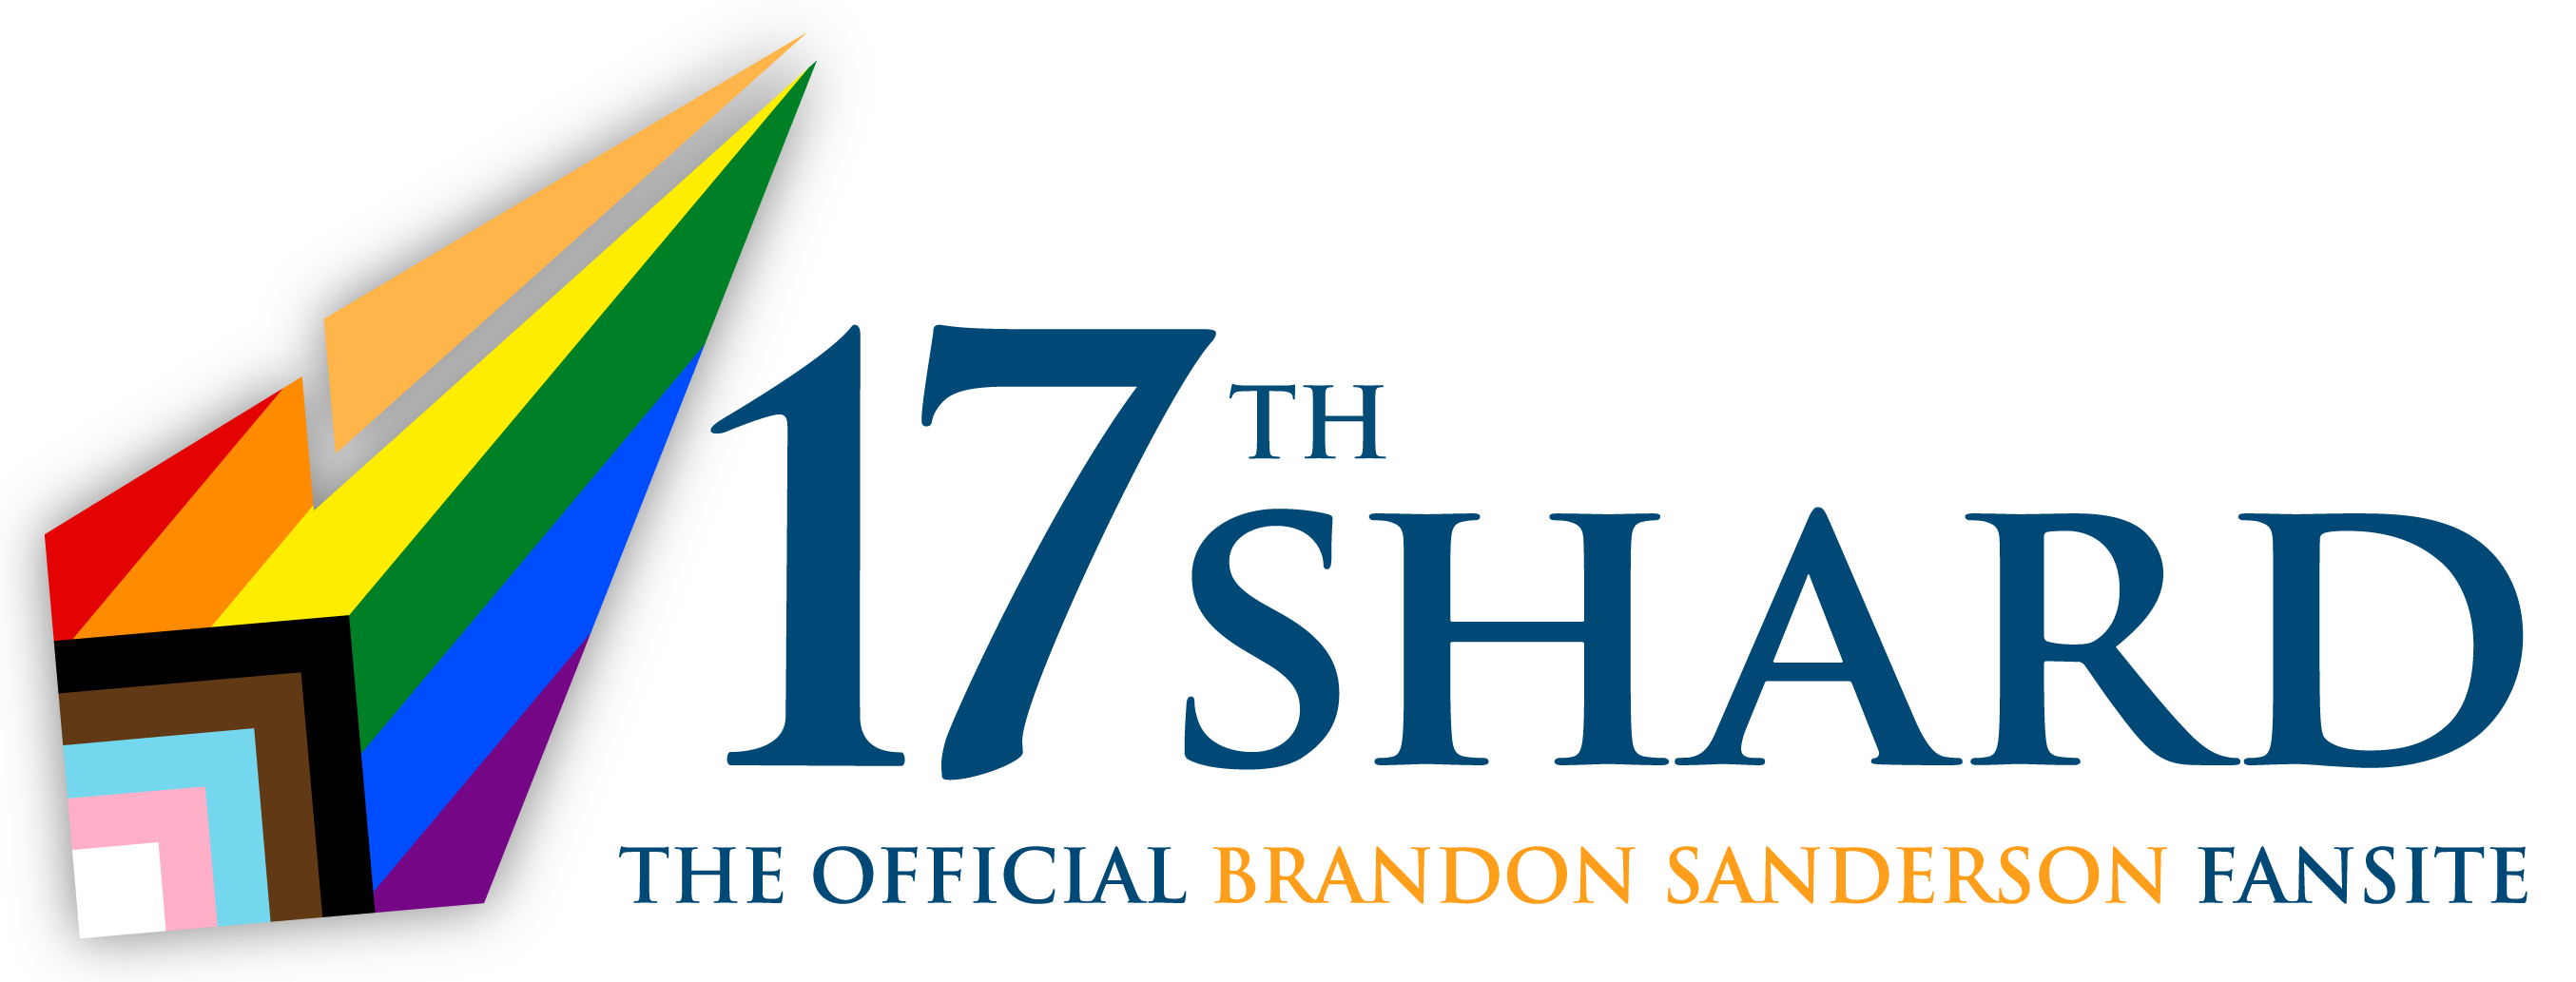 17th Shard, the Official Brandon Sanderson Fansite